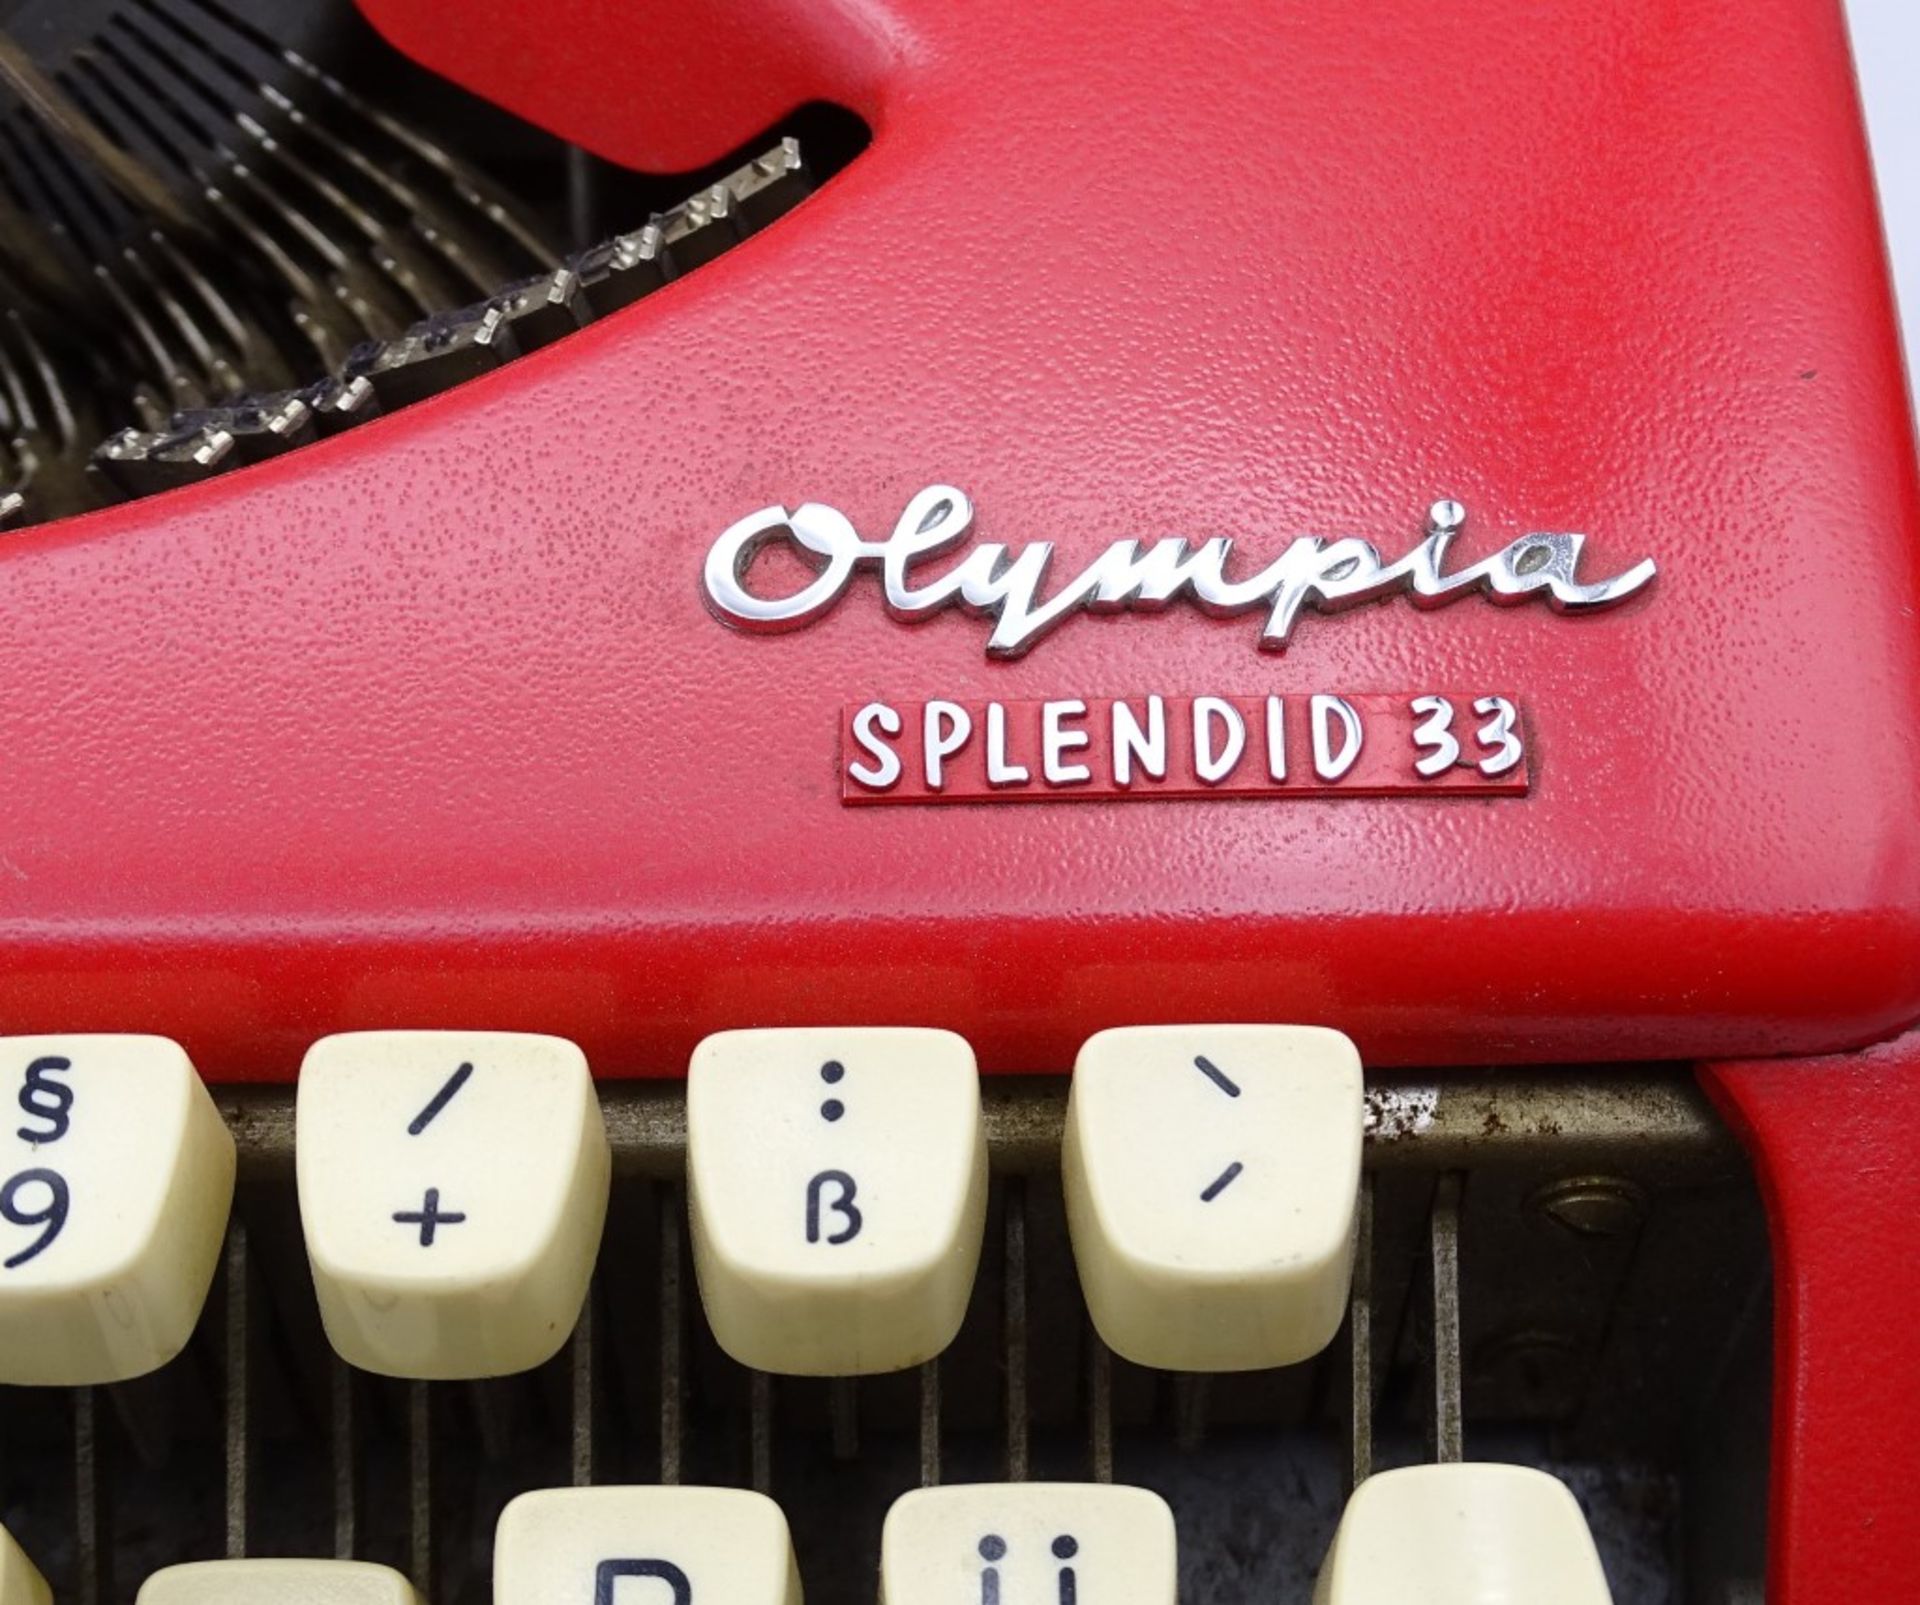 Schreibmaschine Olympia Splendid 33, Olympia Werke AG Wilhelmshaven - Image 3 of 6